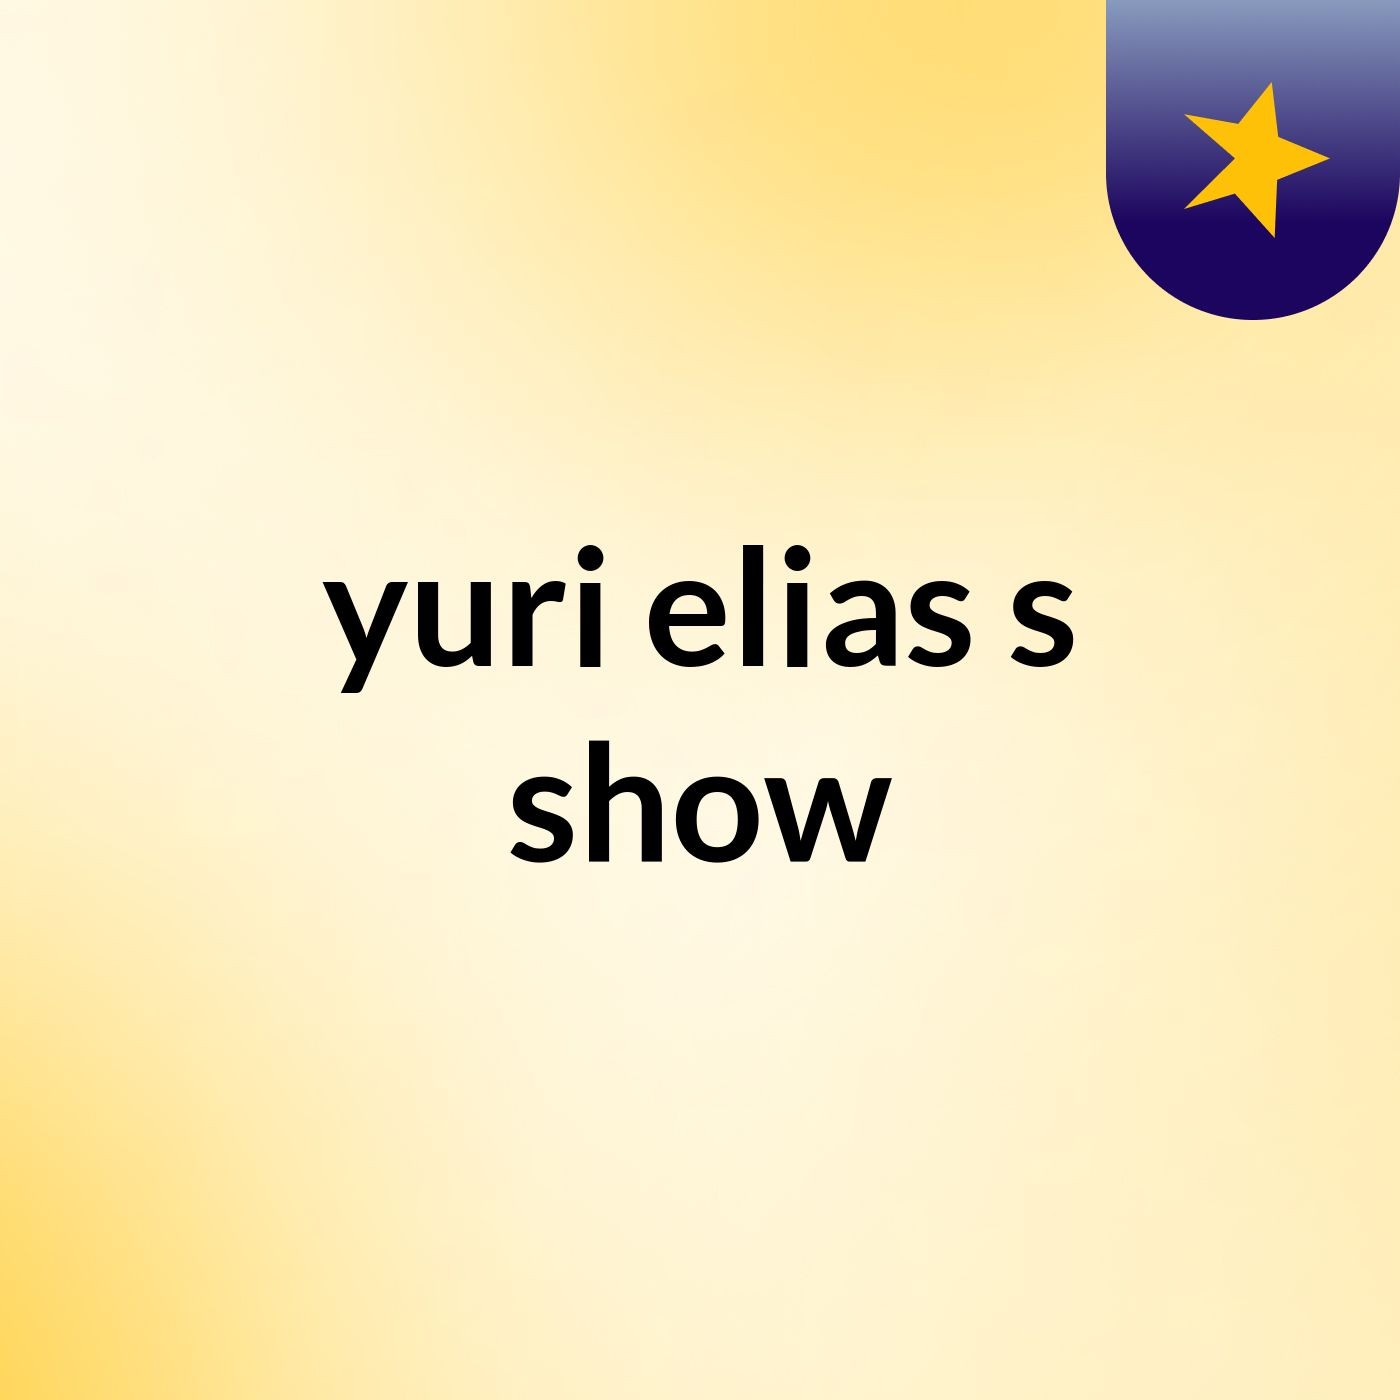 yuri elias's show